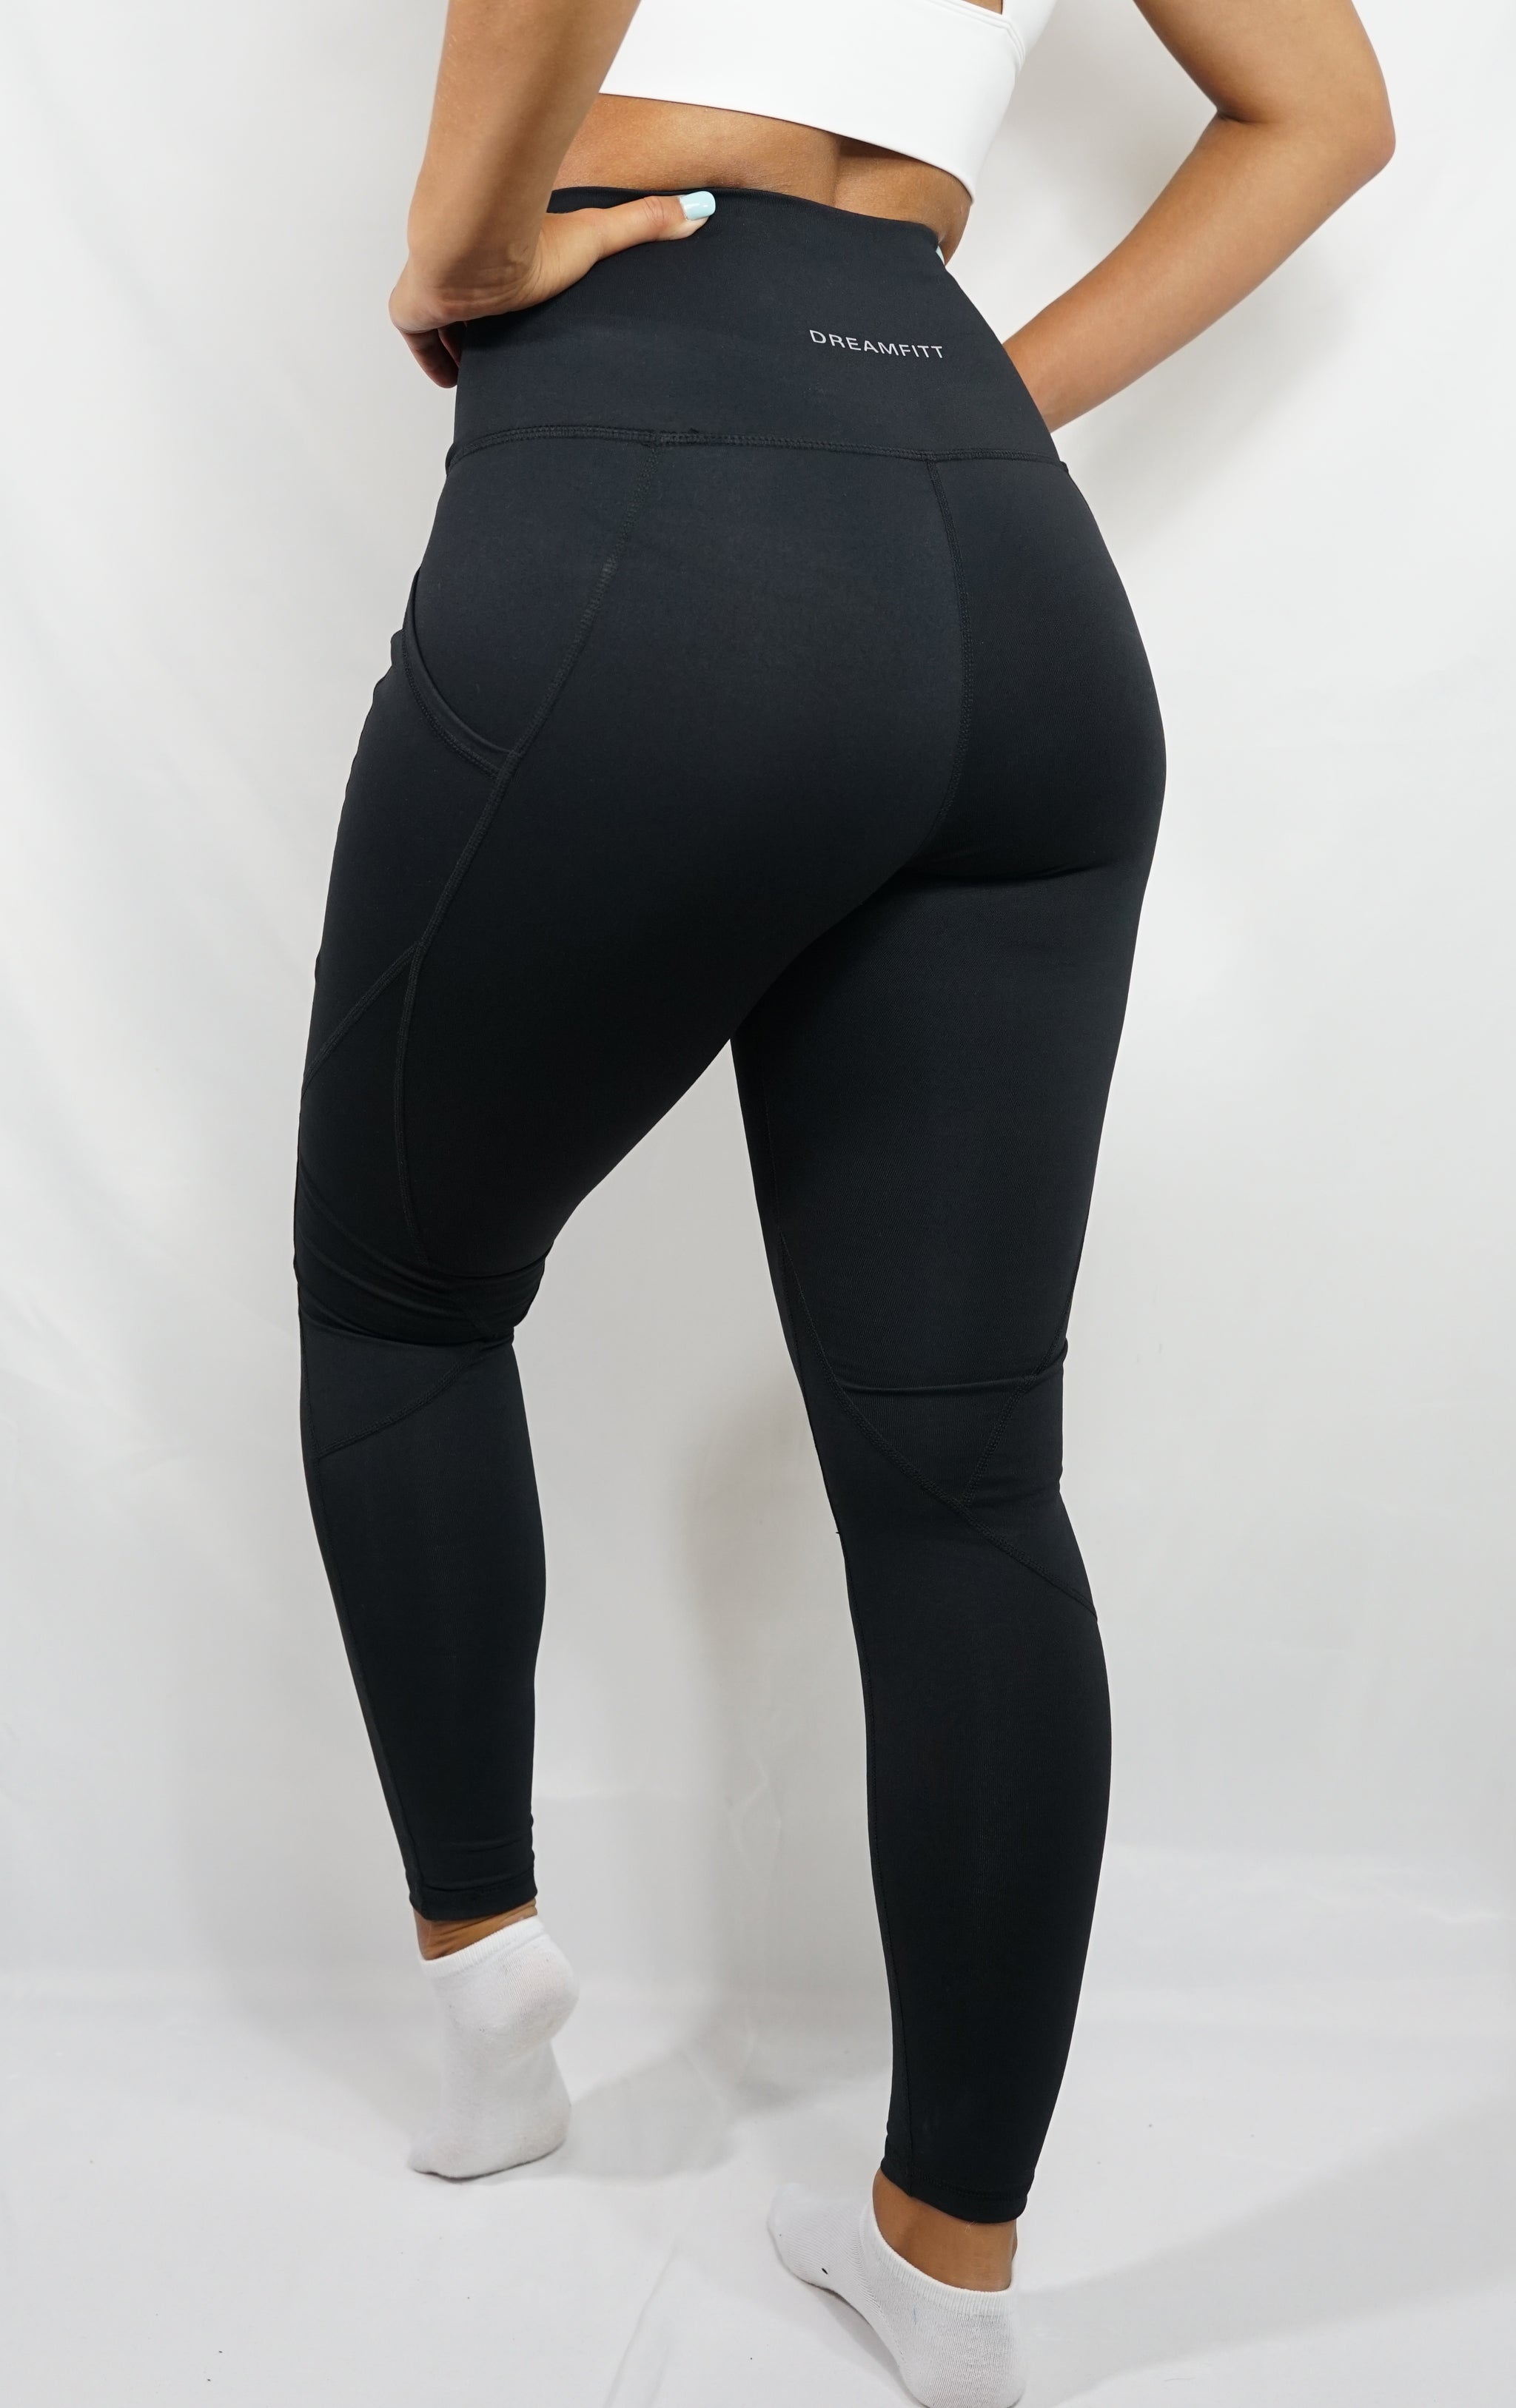 luvit flexi leggings comfortable cotton stretch skin friendly leggings  collection